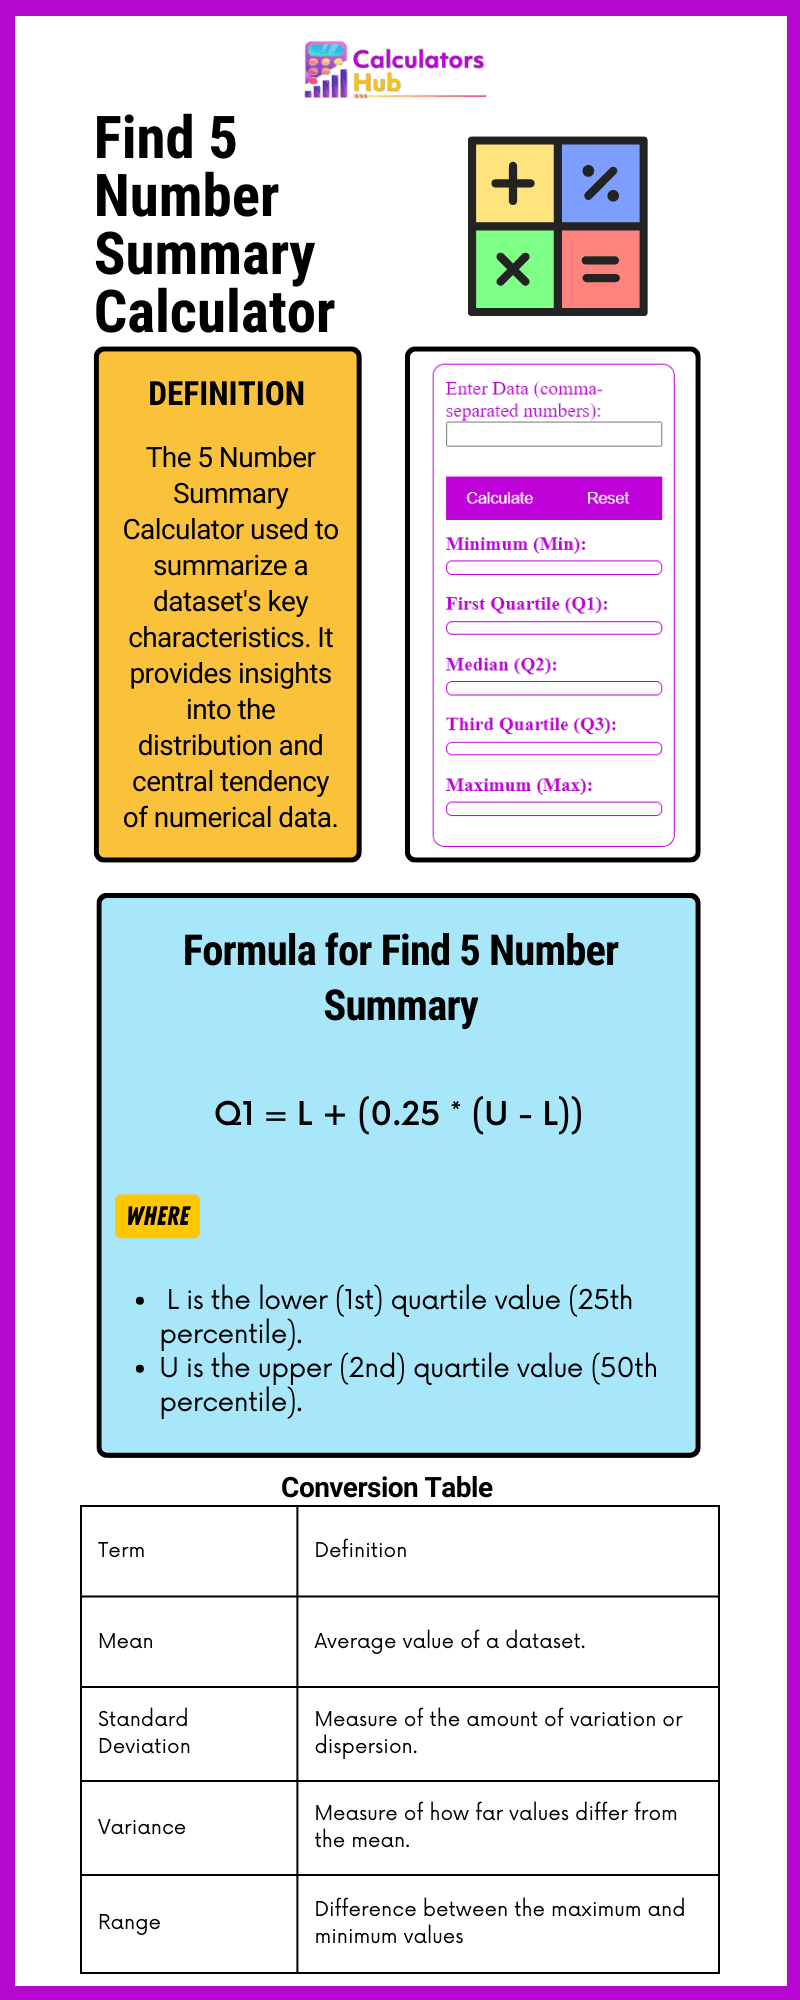 Find 5 Number Summary Calculator